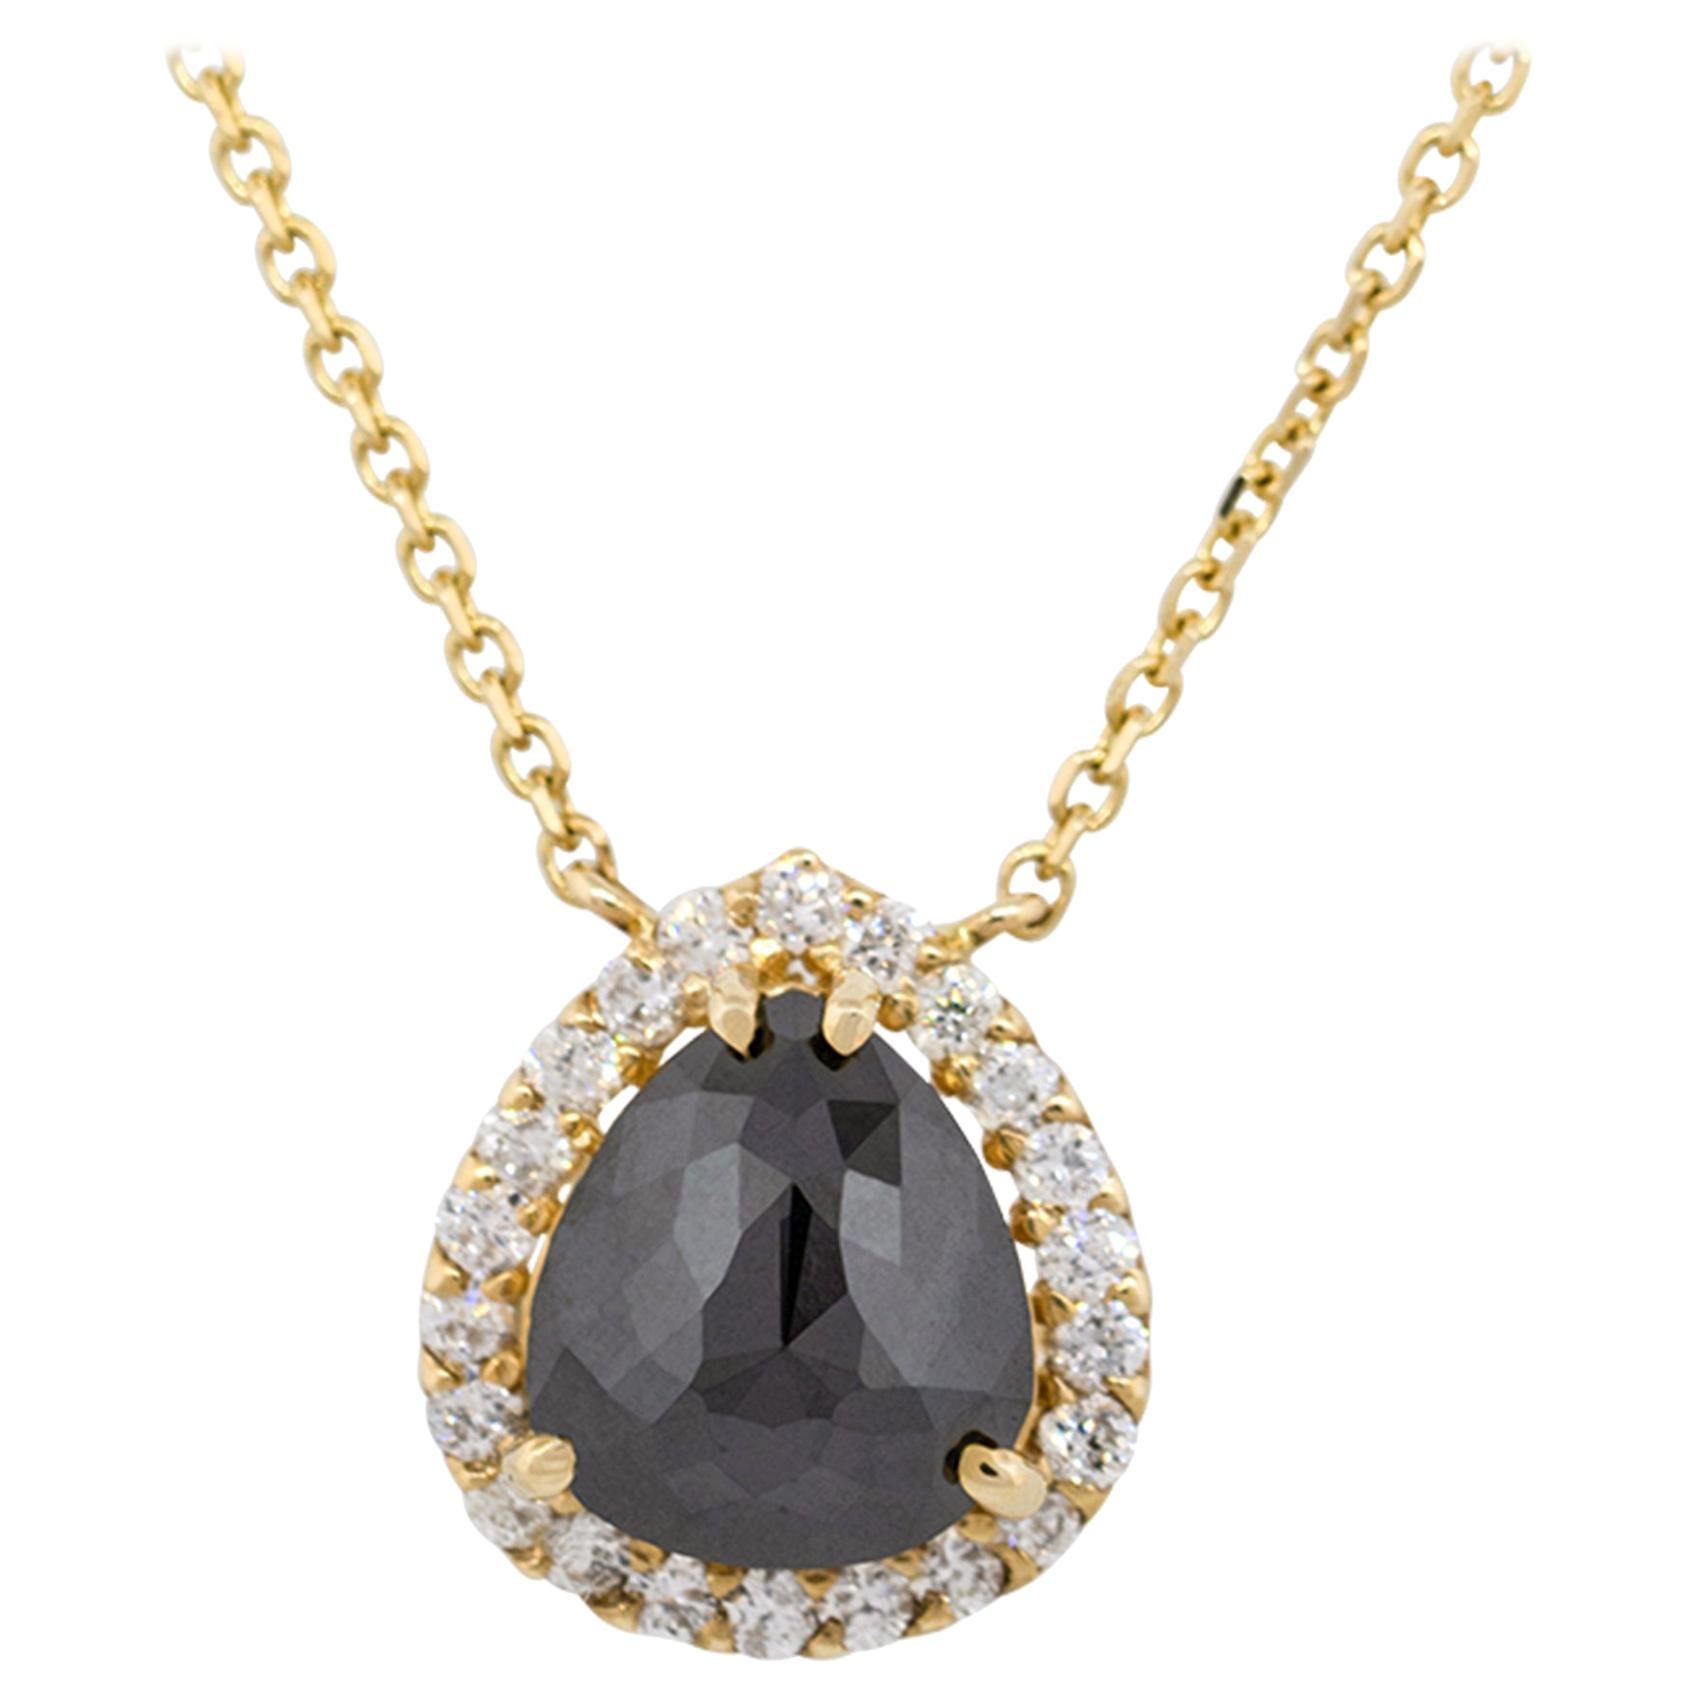 1.91 Carat Black Pear Diamond Pendant Necklace 14 Karat in Stock